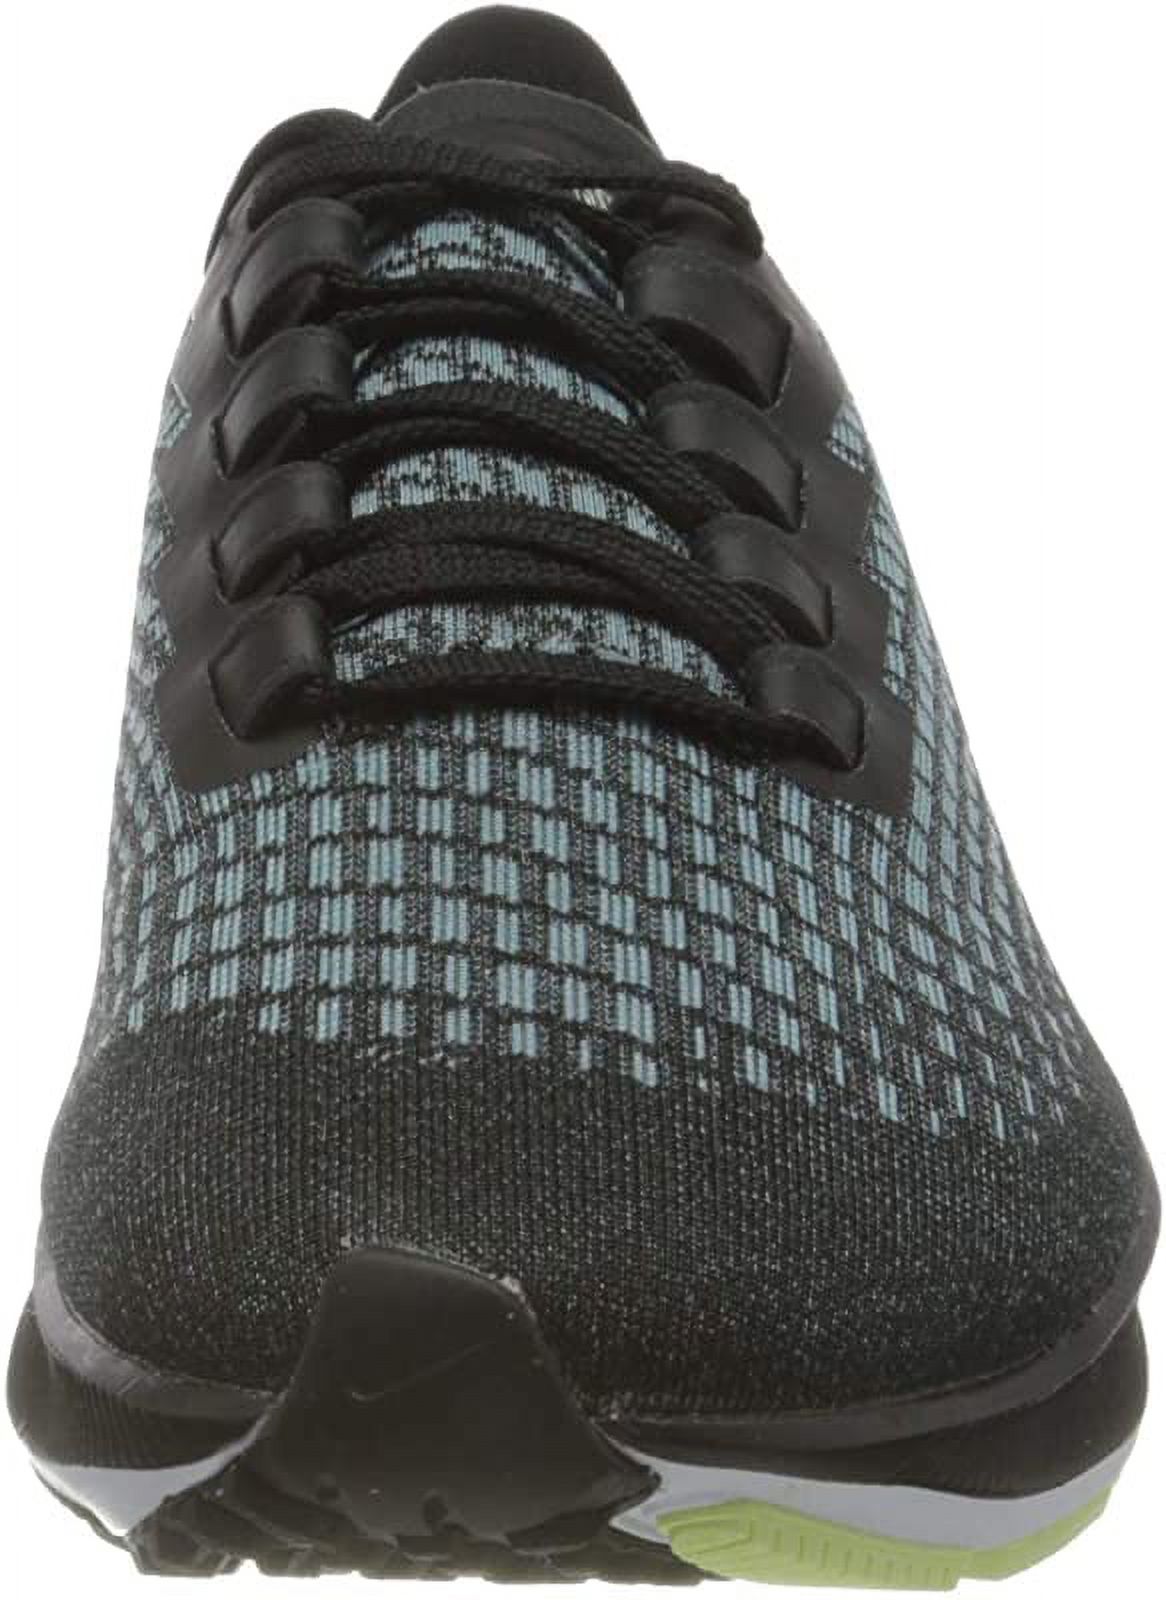 Nike Women's Air Zoom Pegasus 37 Running Shoes, Glacier Ice/Volt, 7.5 B(M) US - image 2 of 4